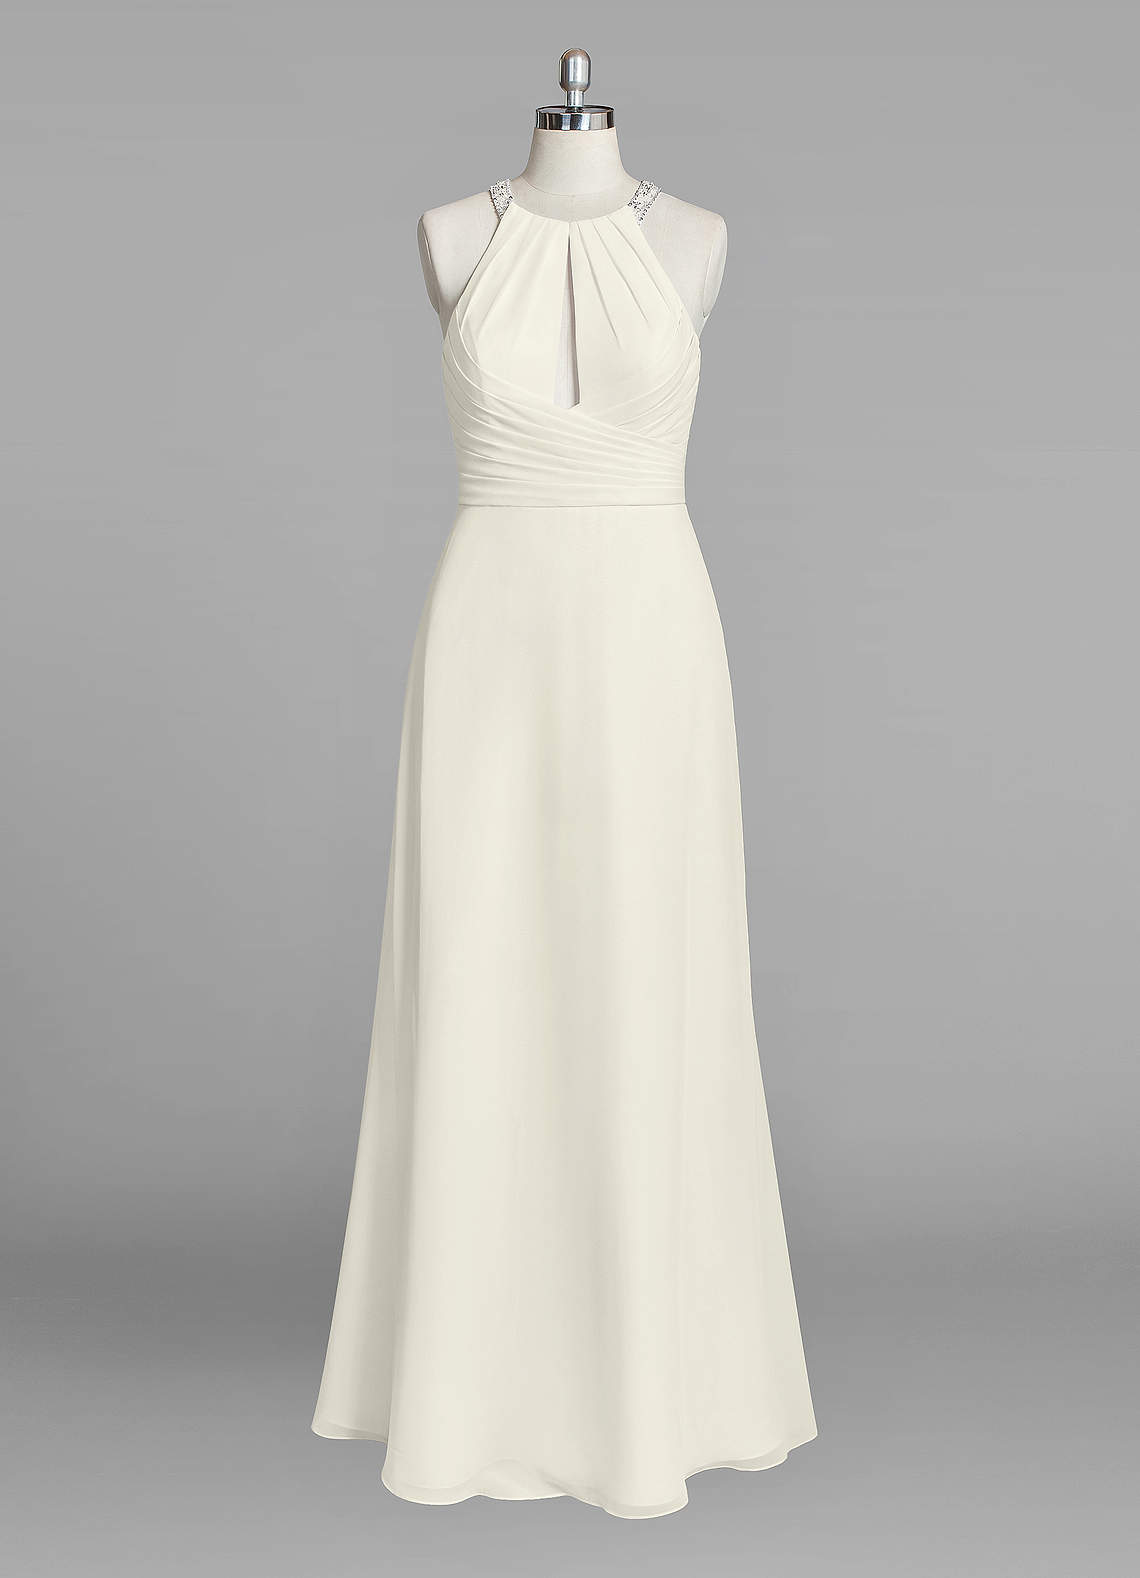 Azazie Selena Wedding Dresses Sheath Sequins Chiffon Floor-Length Dress image1